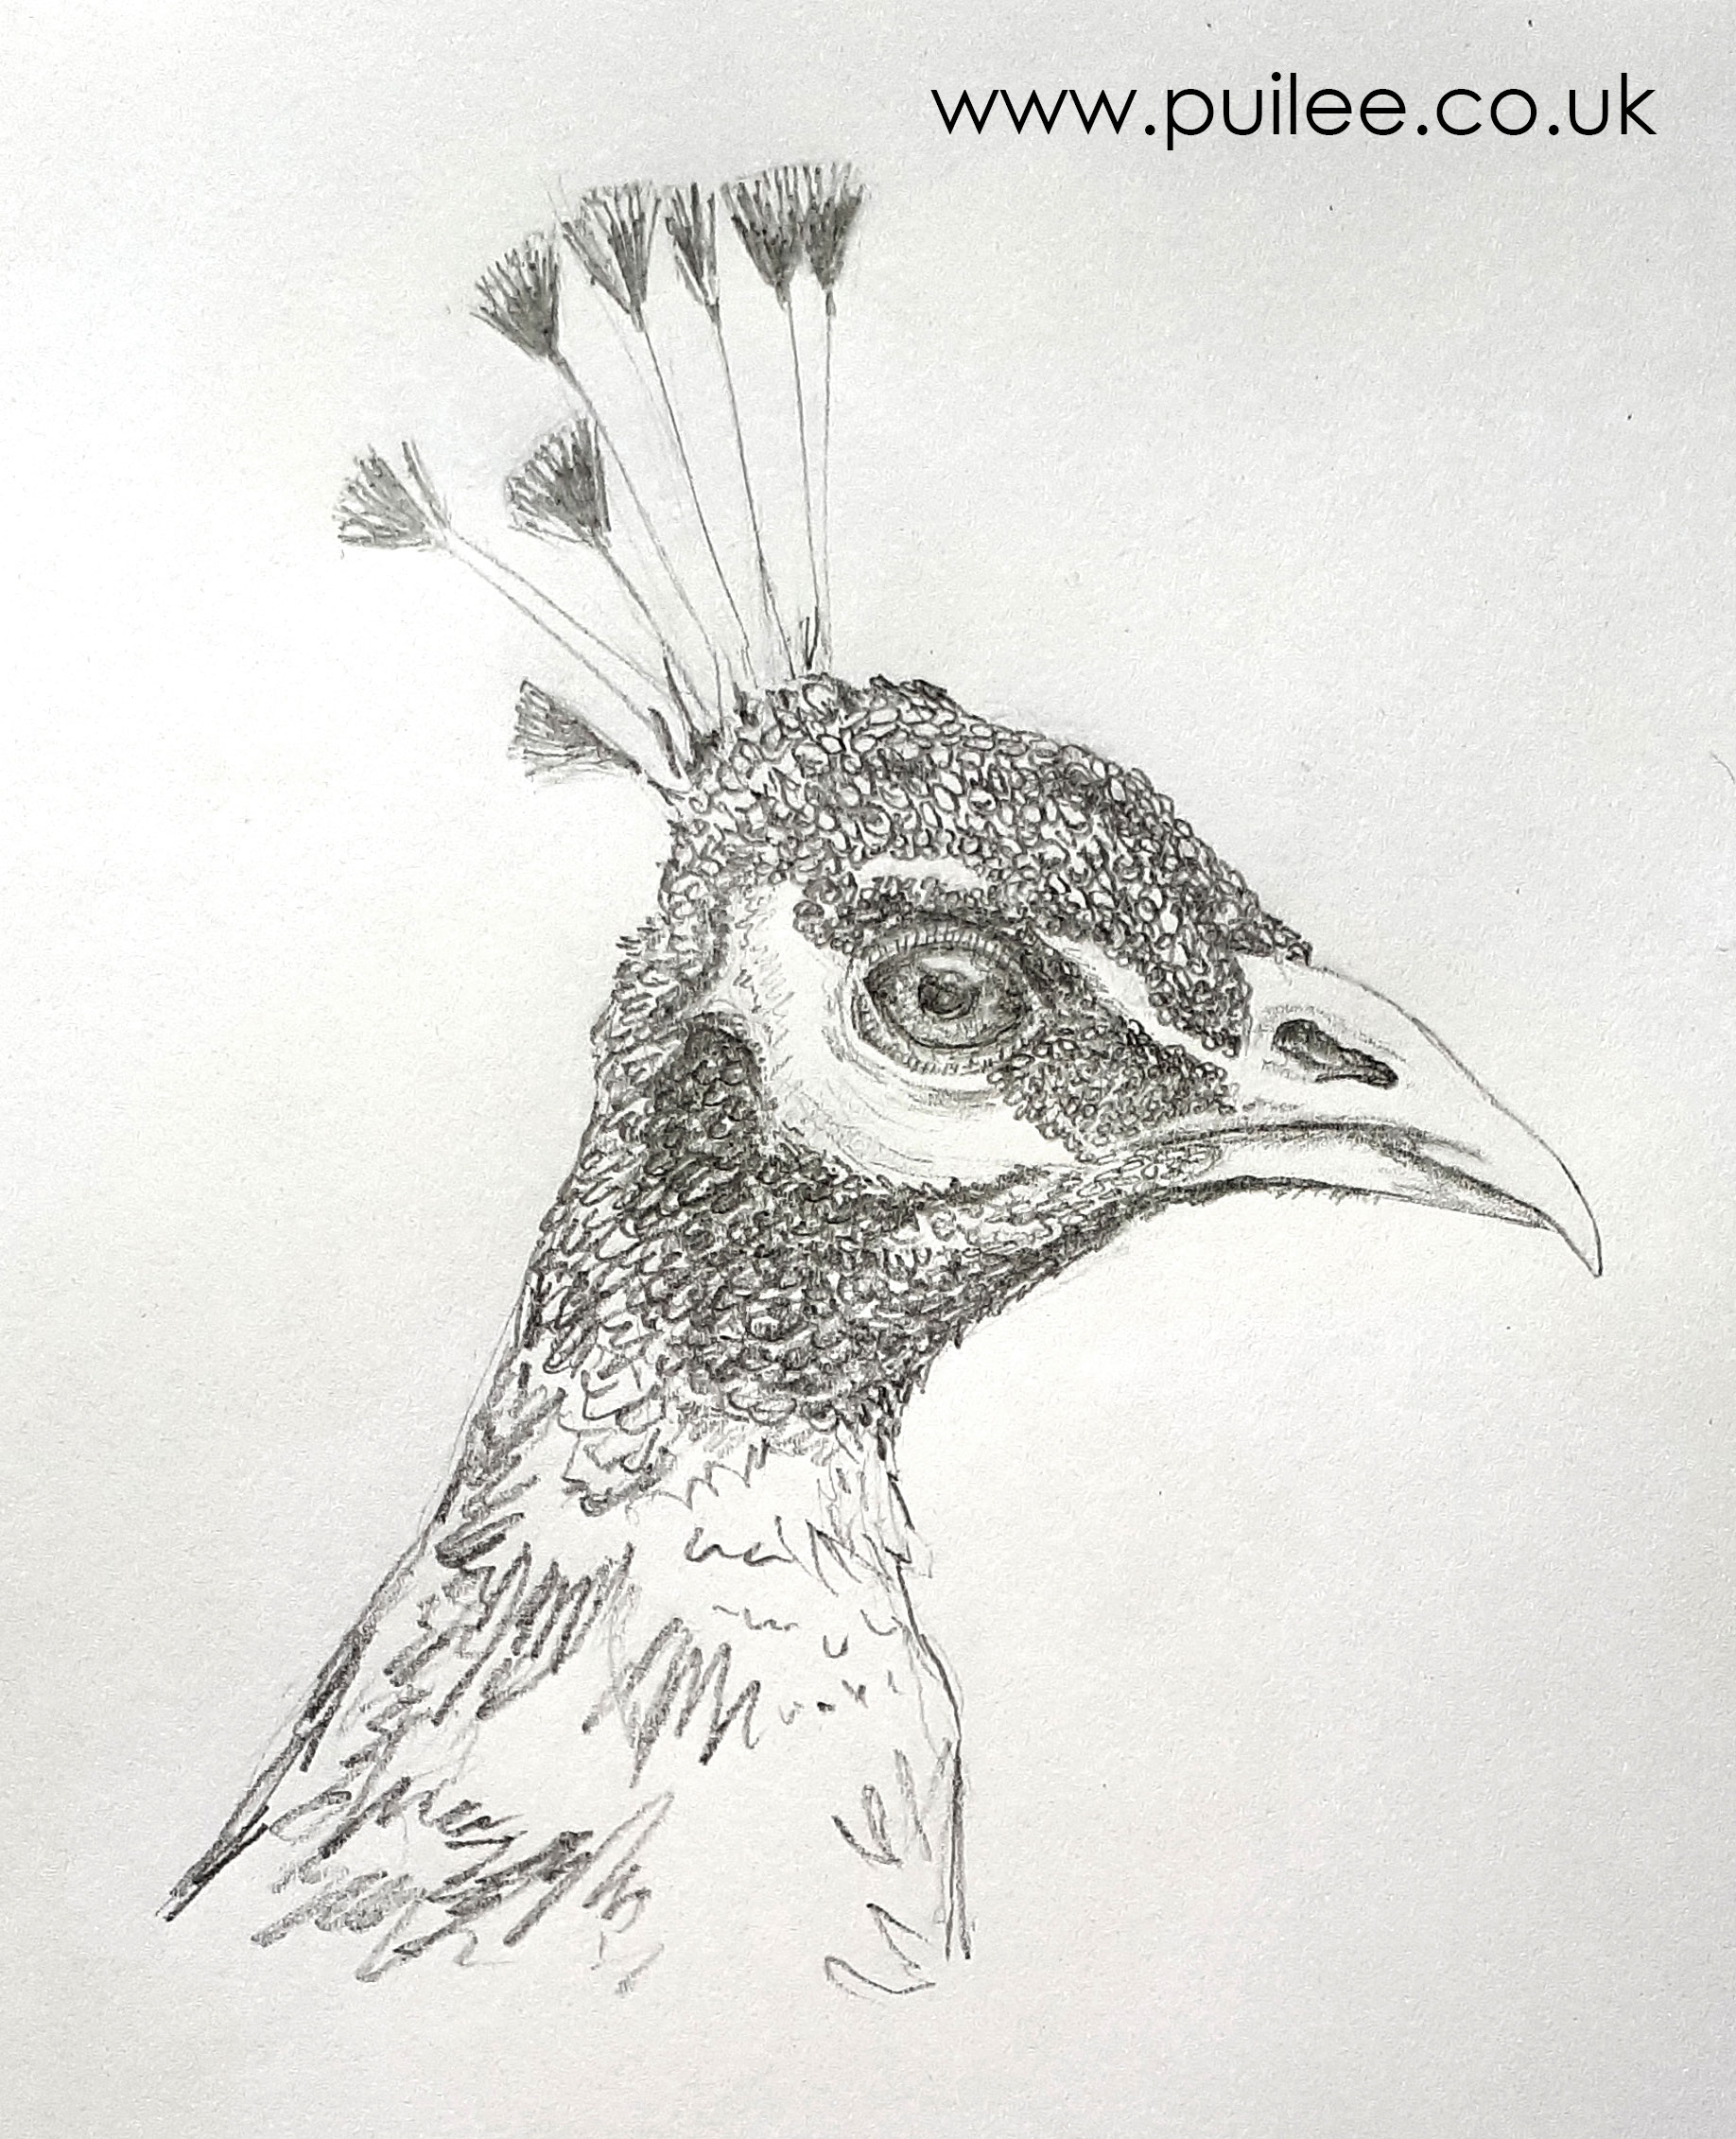 Peacock Head (2020) pencil on paper - Artist Pui Lee